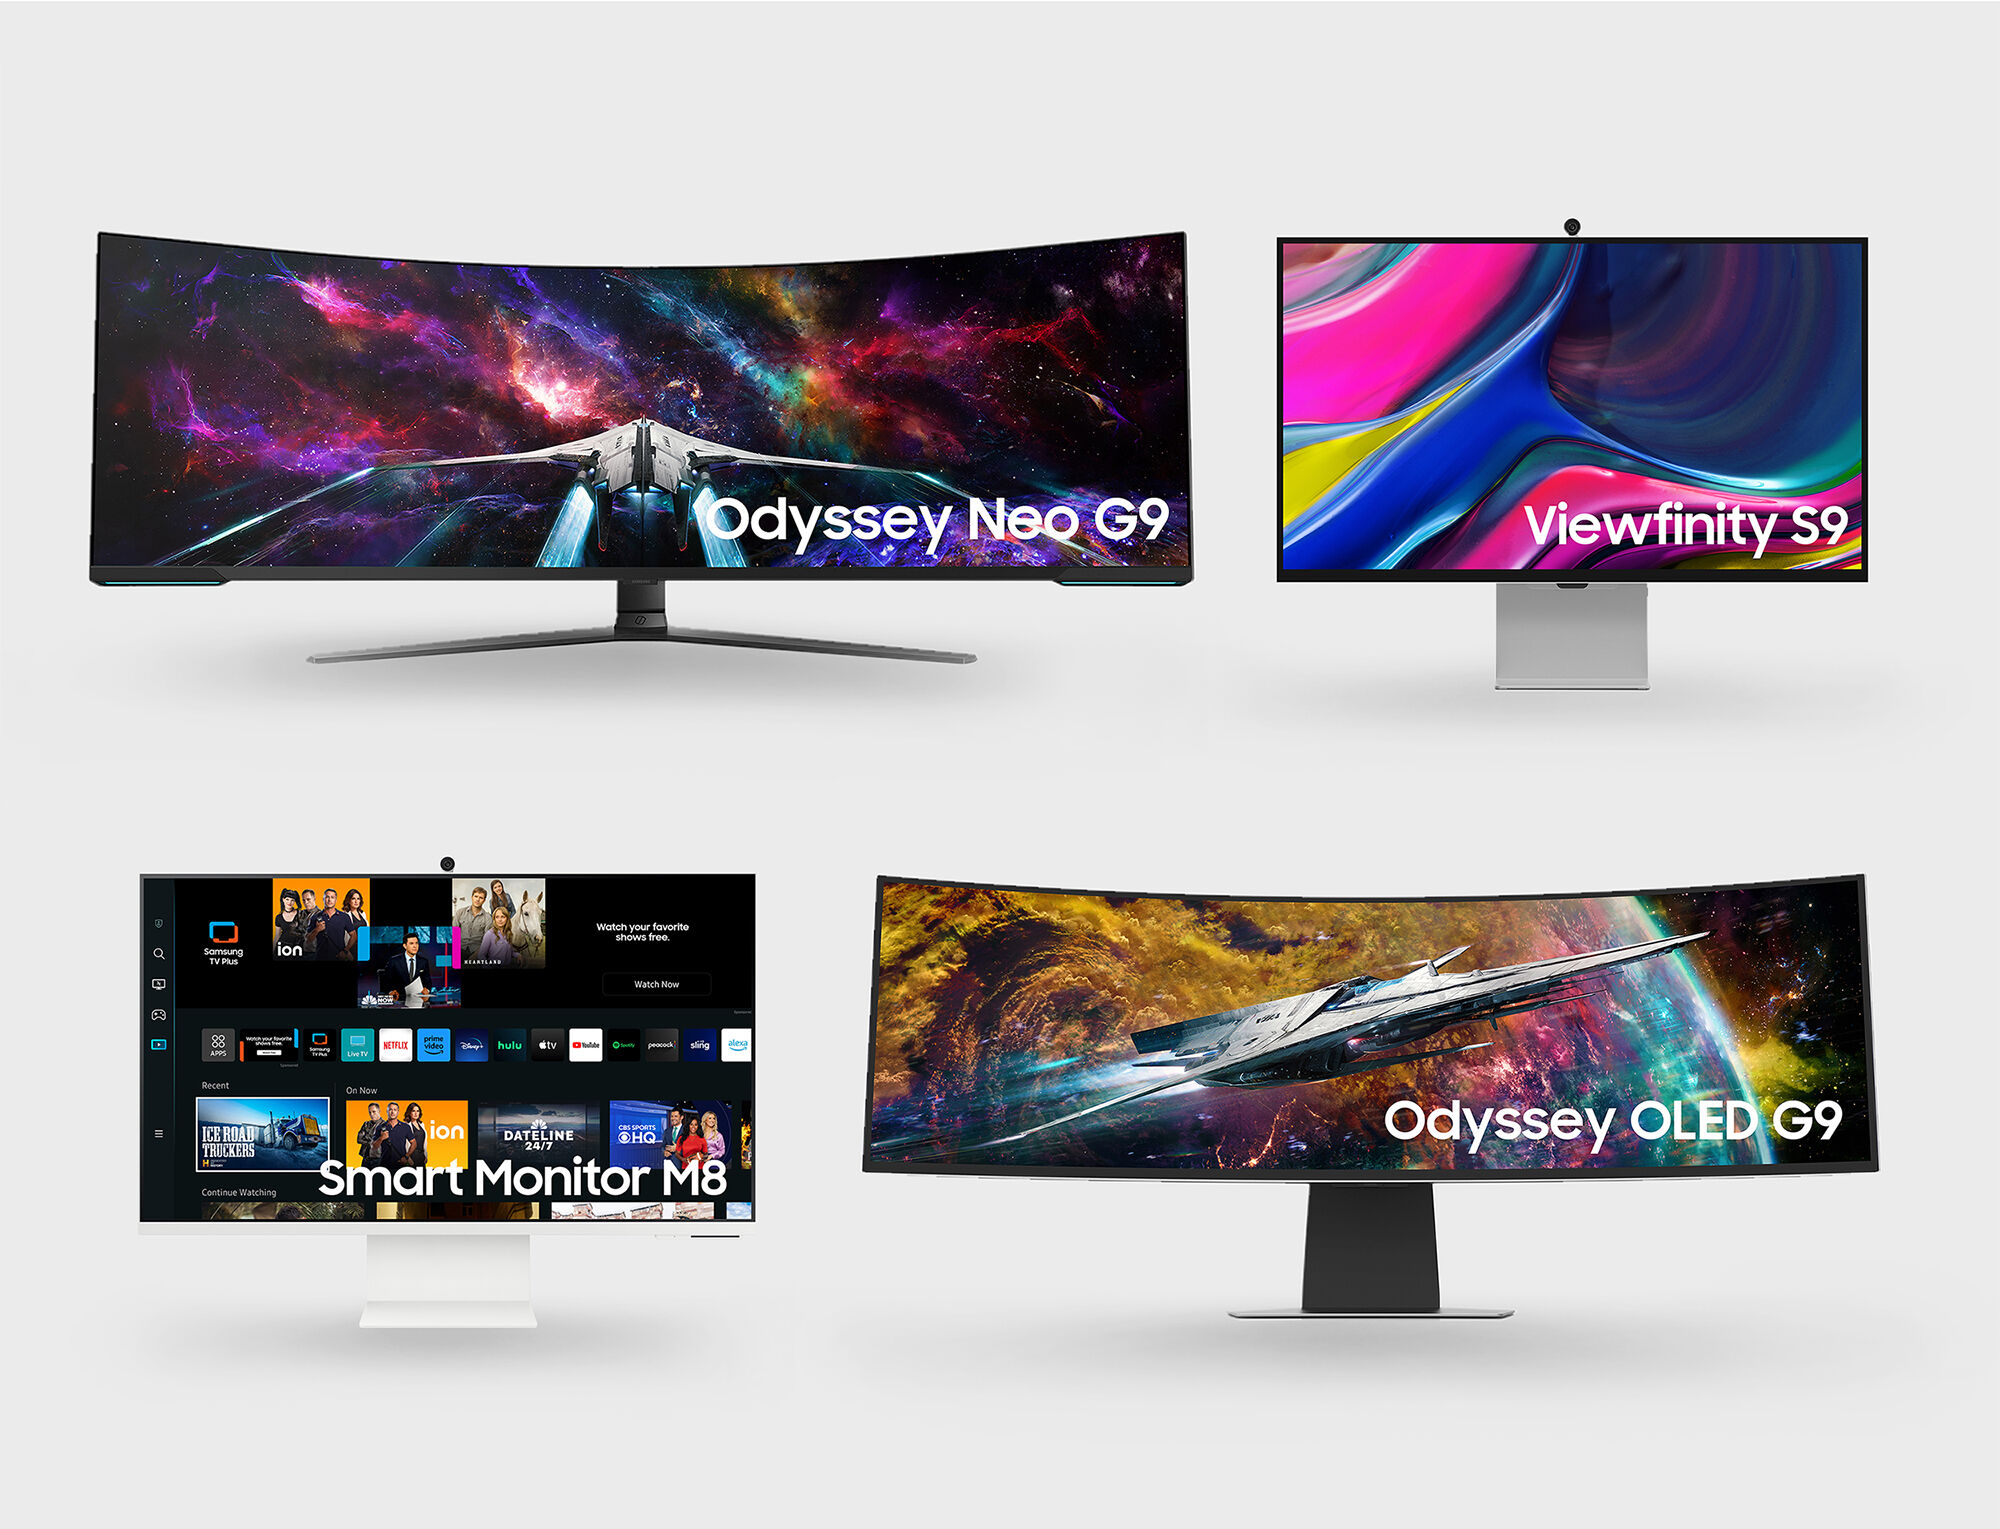 Samsung Introduces World's First DisplayPort 2.1 Gaming Monitor, Odyssey Neo G9